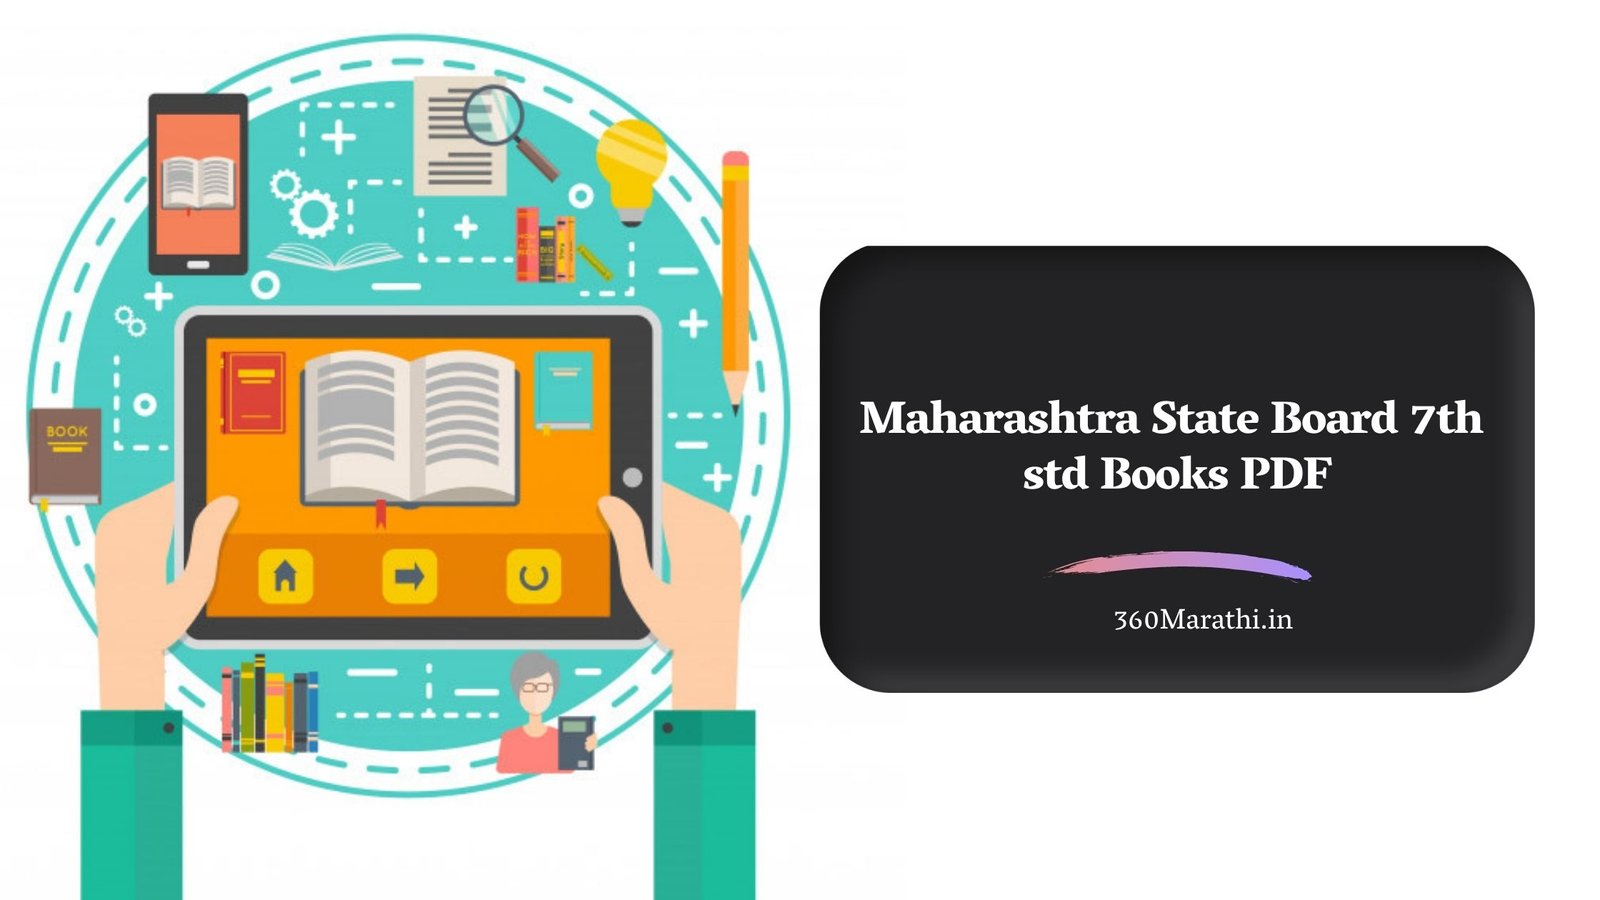 Maharashtra State Board 7th std Books PDF